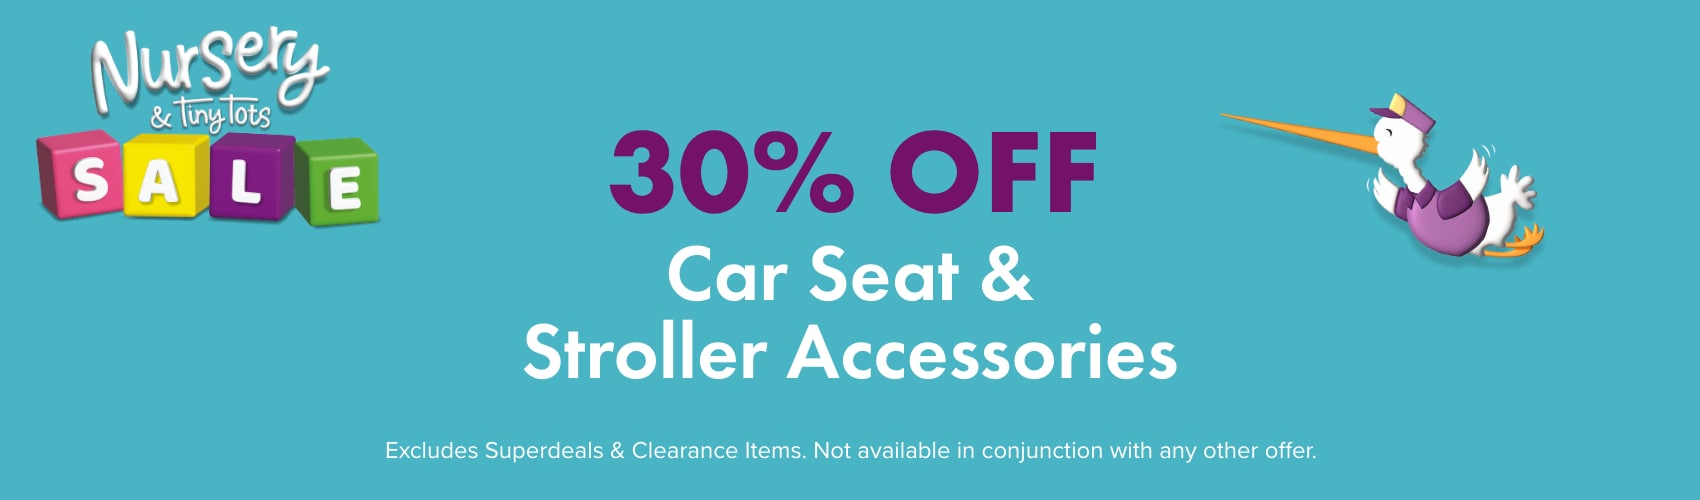 30% OFF Nursery Car Seat & Stroller Accessories